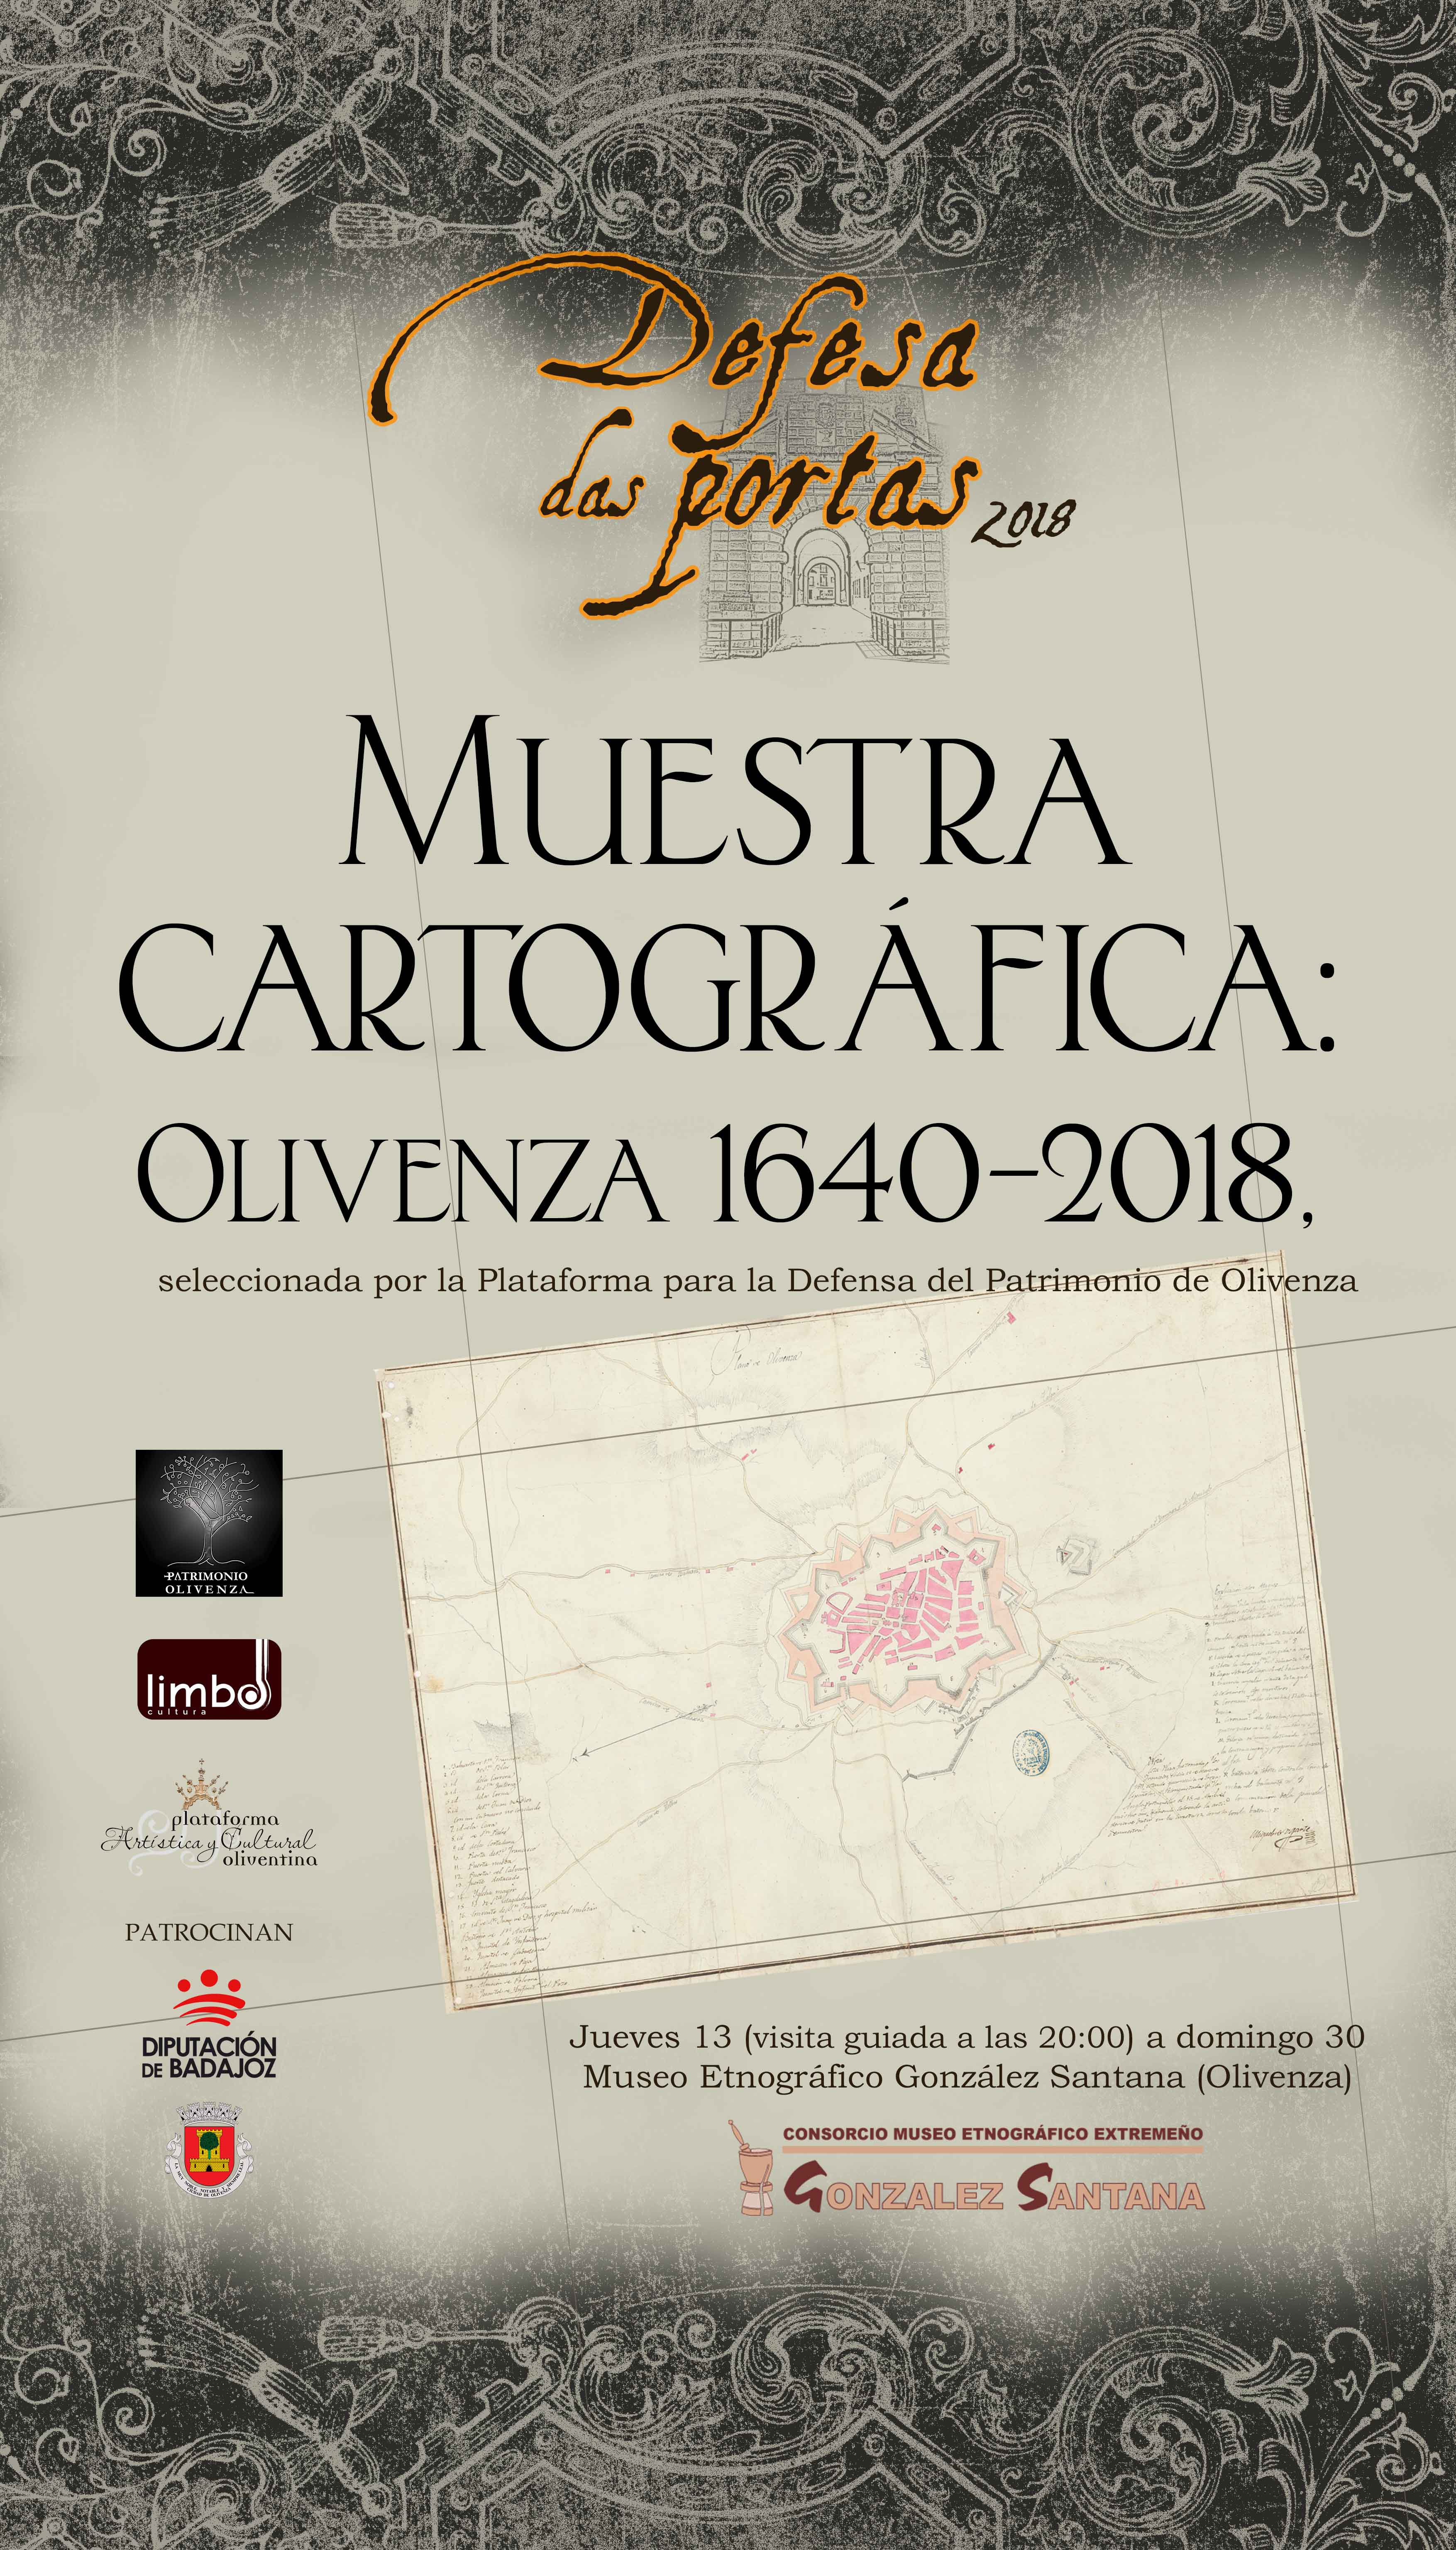 Muestra cartografica olivenza 1650 2018 19